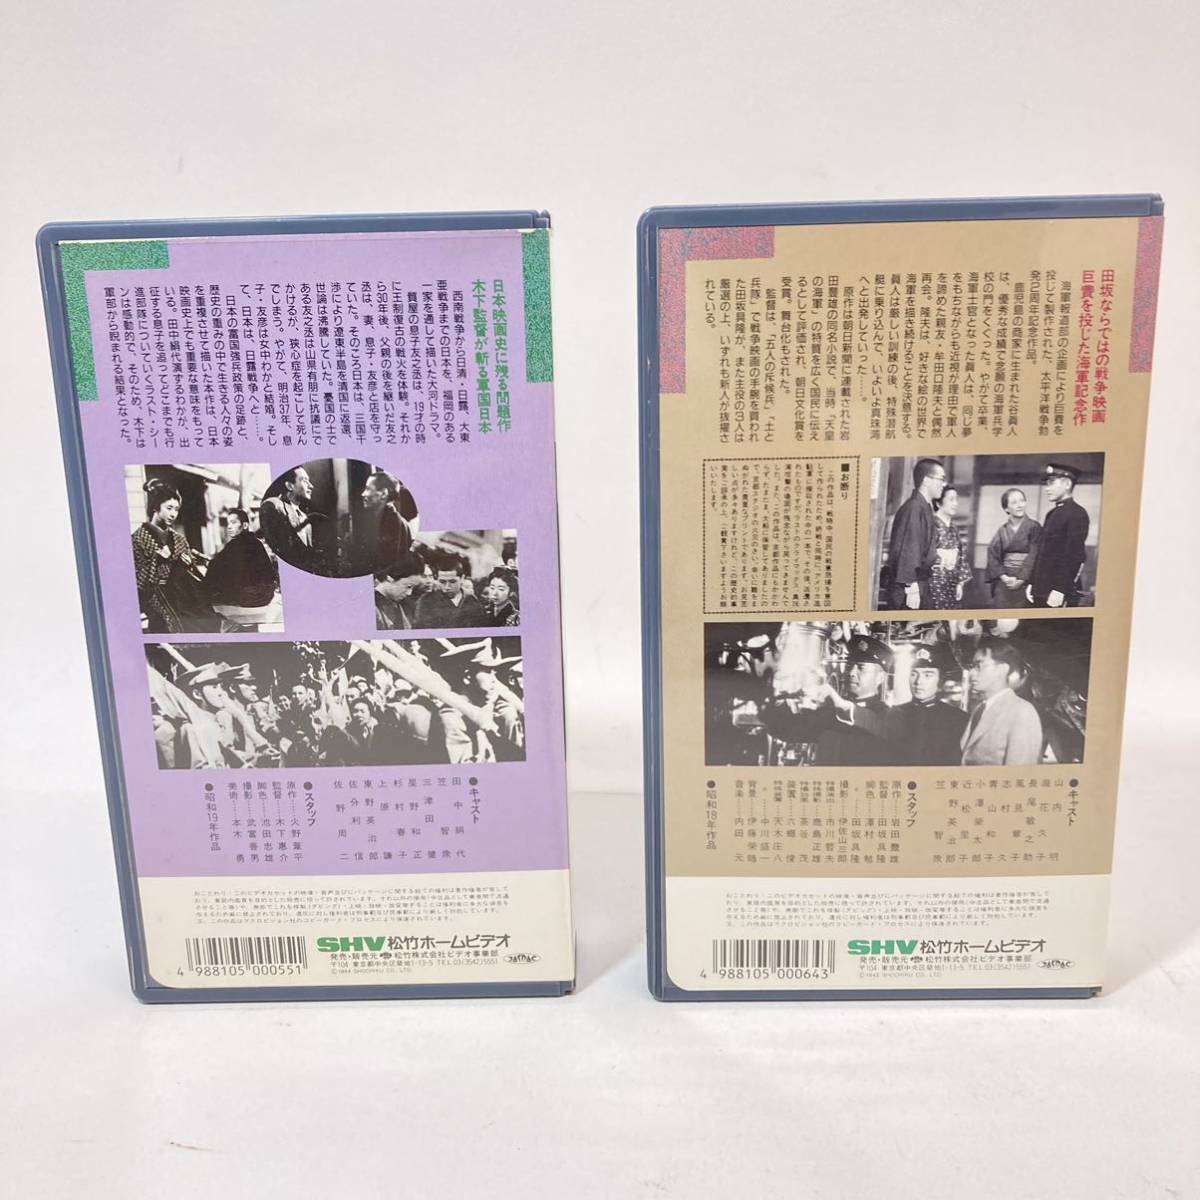 SHV BEST SELECTION VHS 陸軍 海軍 モノクロ 戦争 映画 SB-0056 SB-0049 2本 セット カセットテープ ビデオ レトロ 3003_画像4